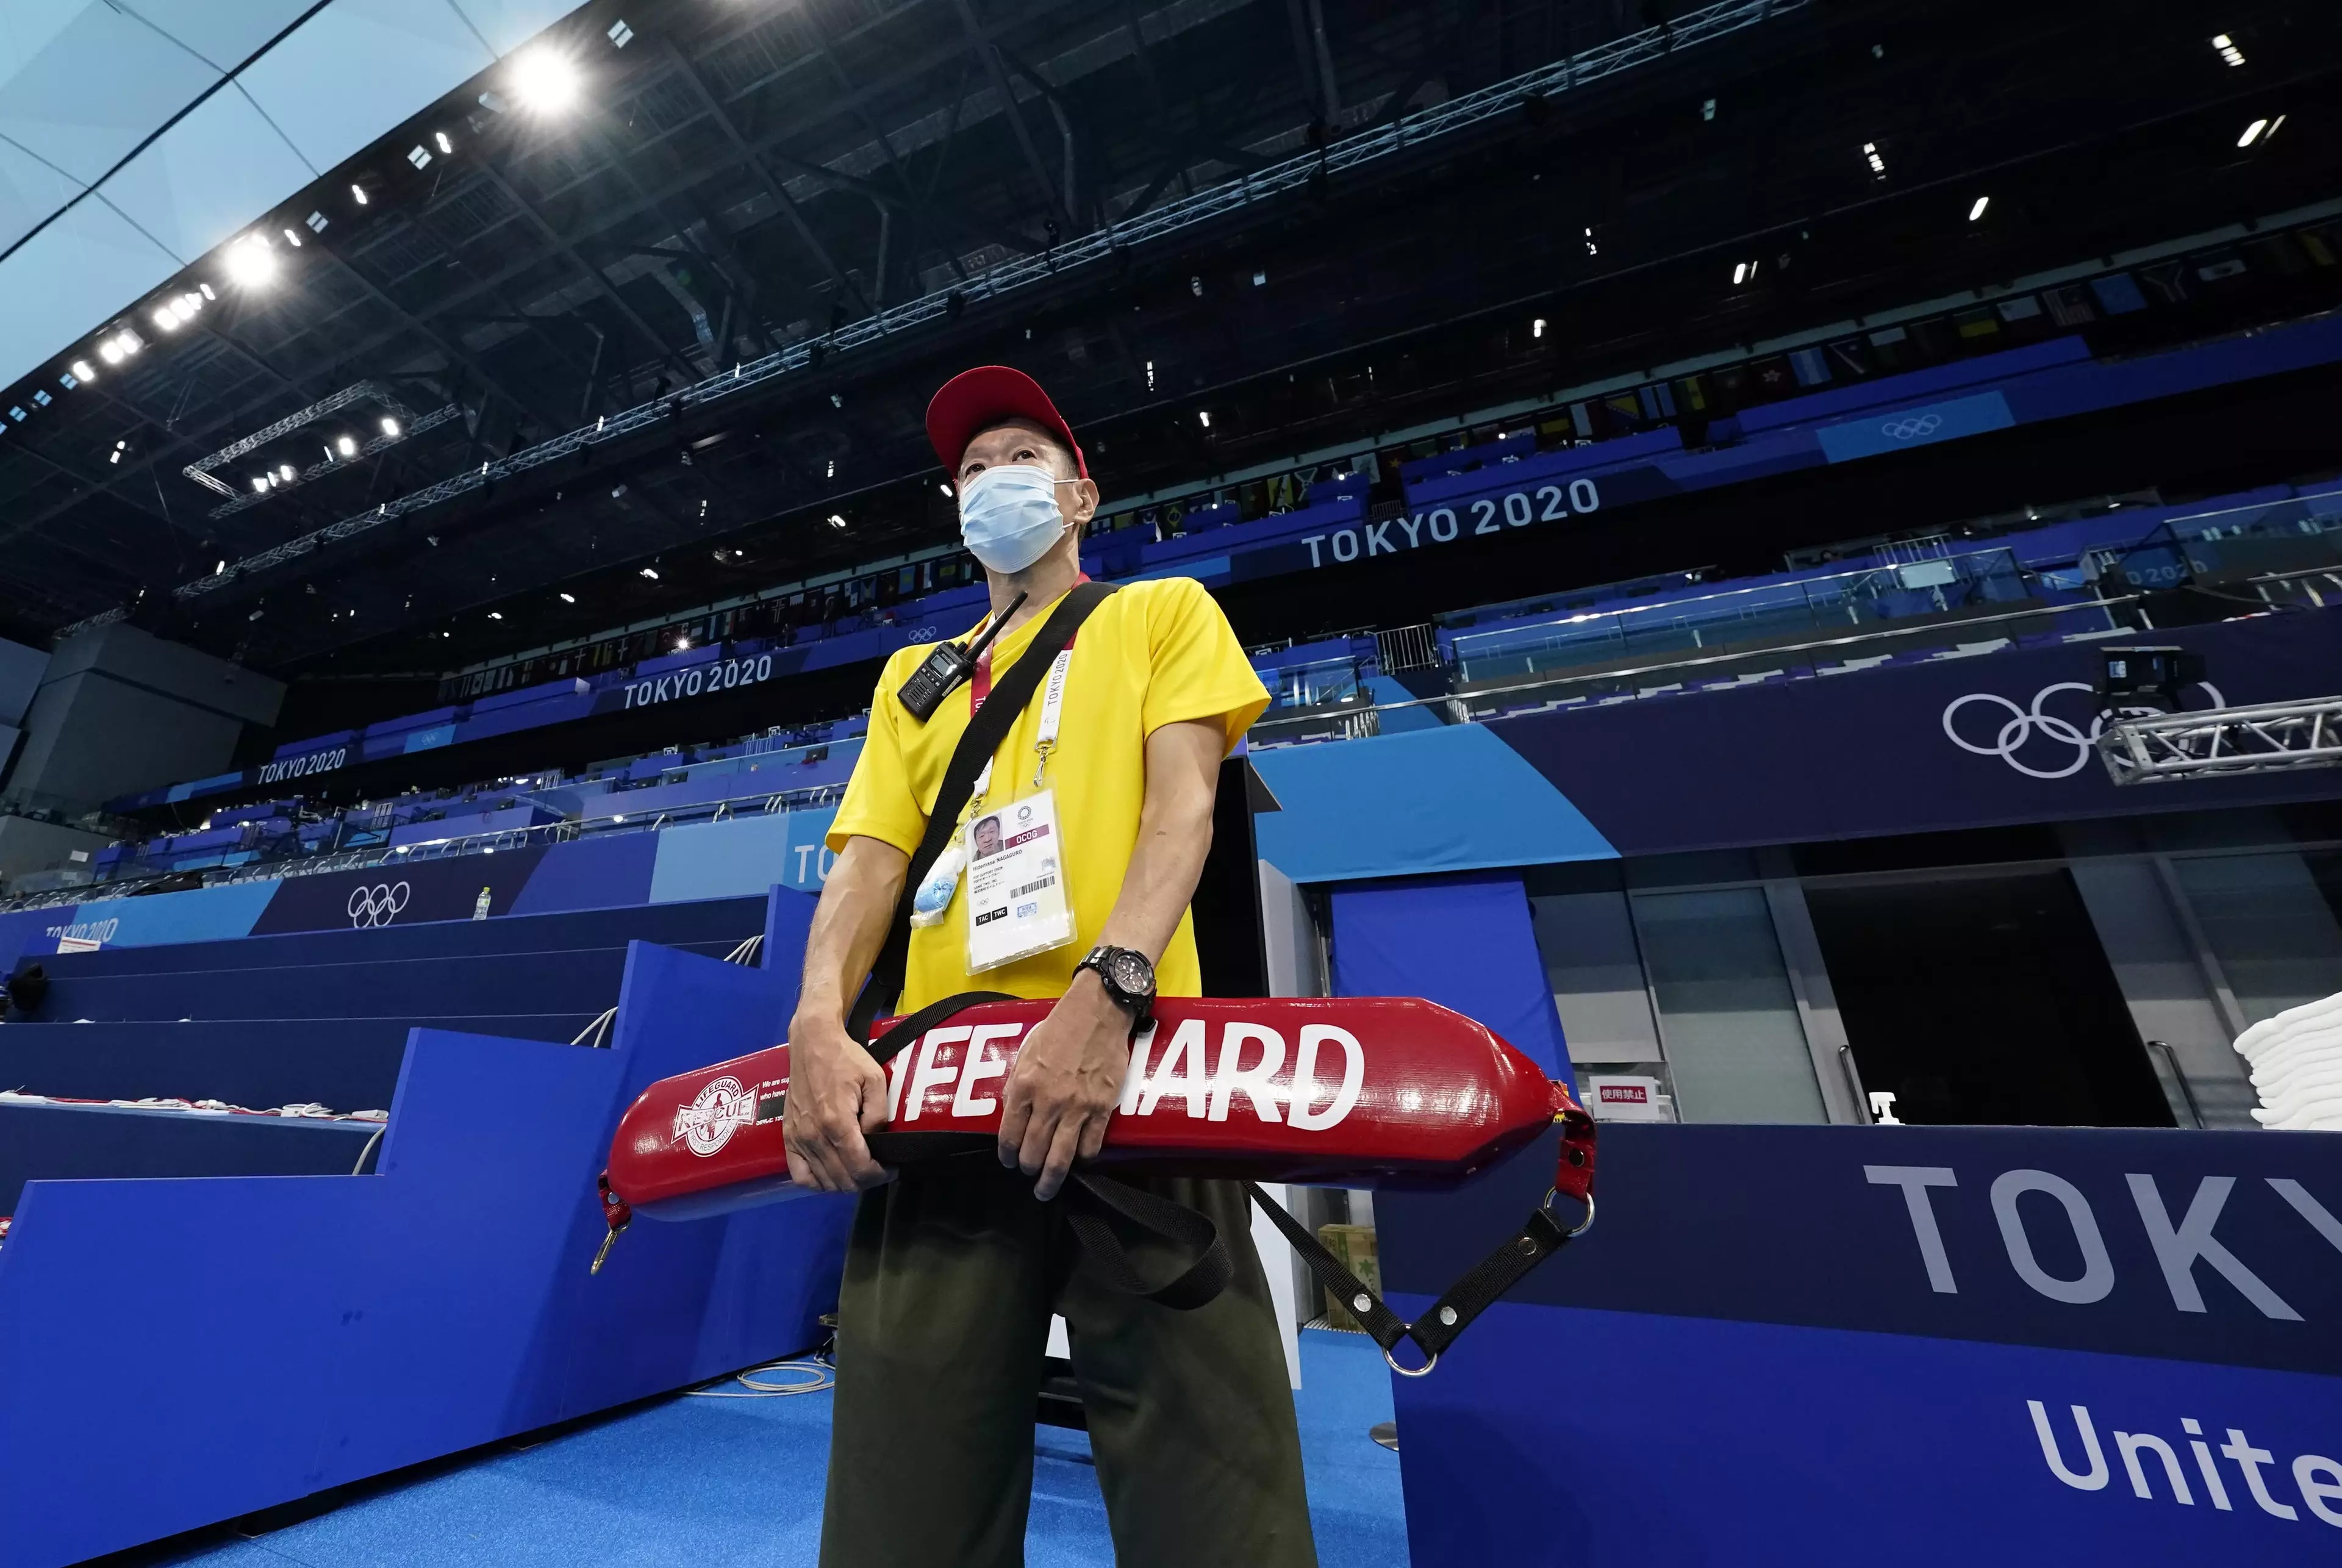 A lifeguard at the Tokyo Olympics.